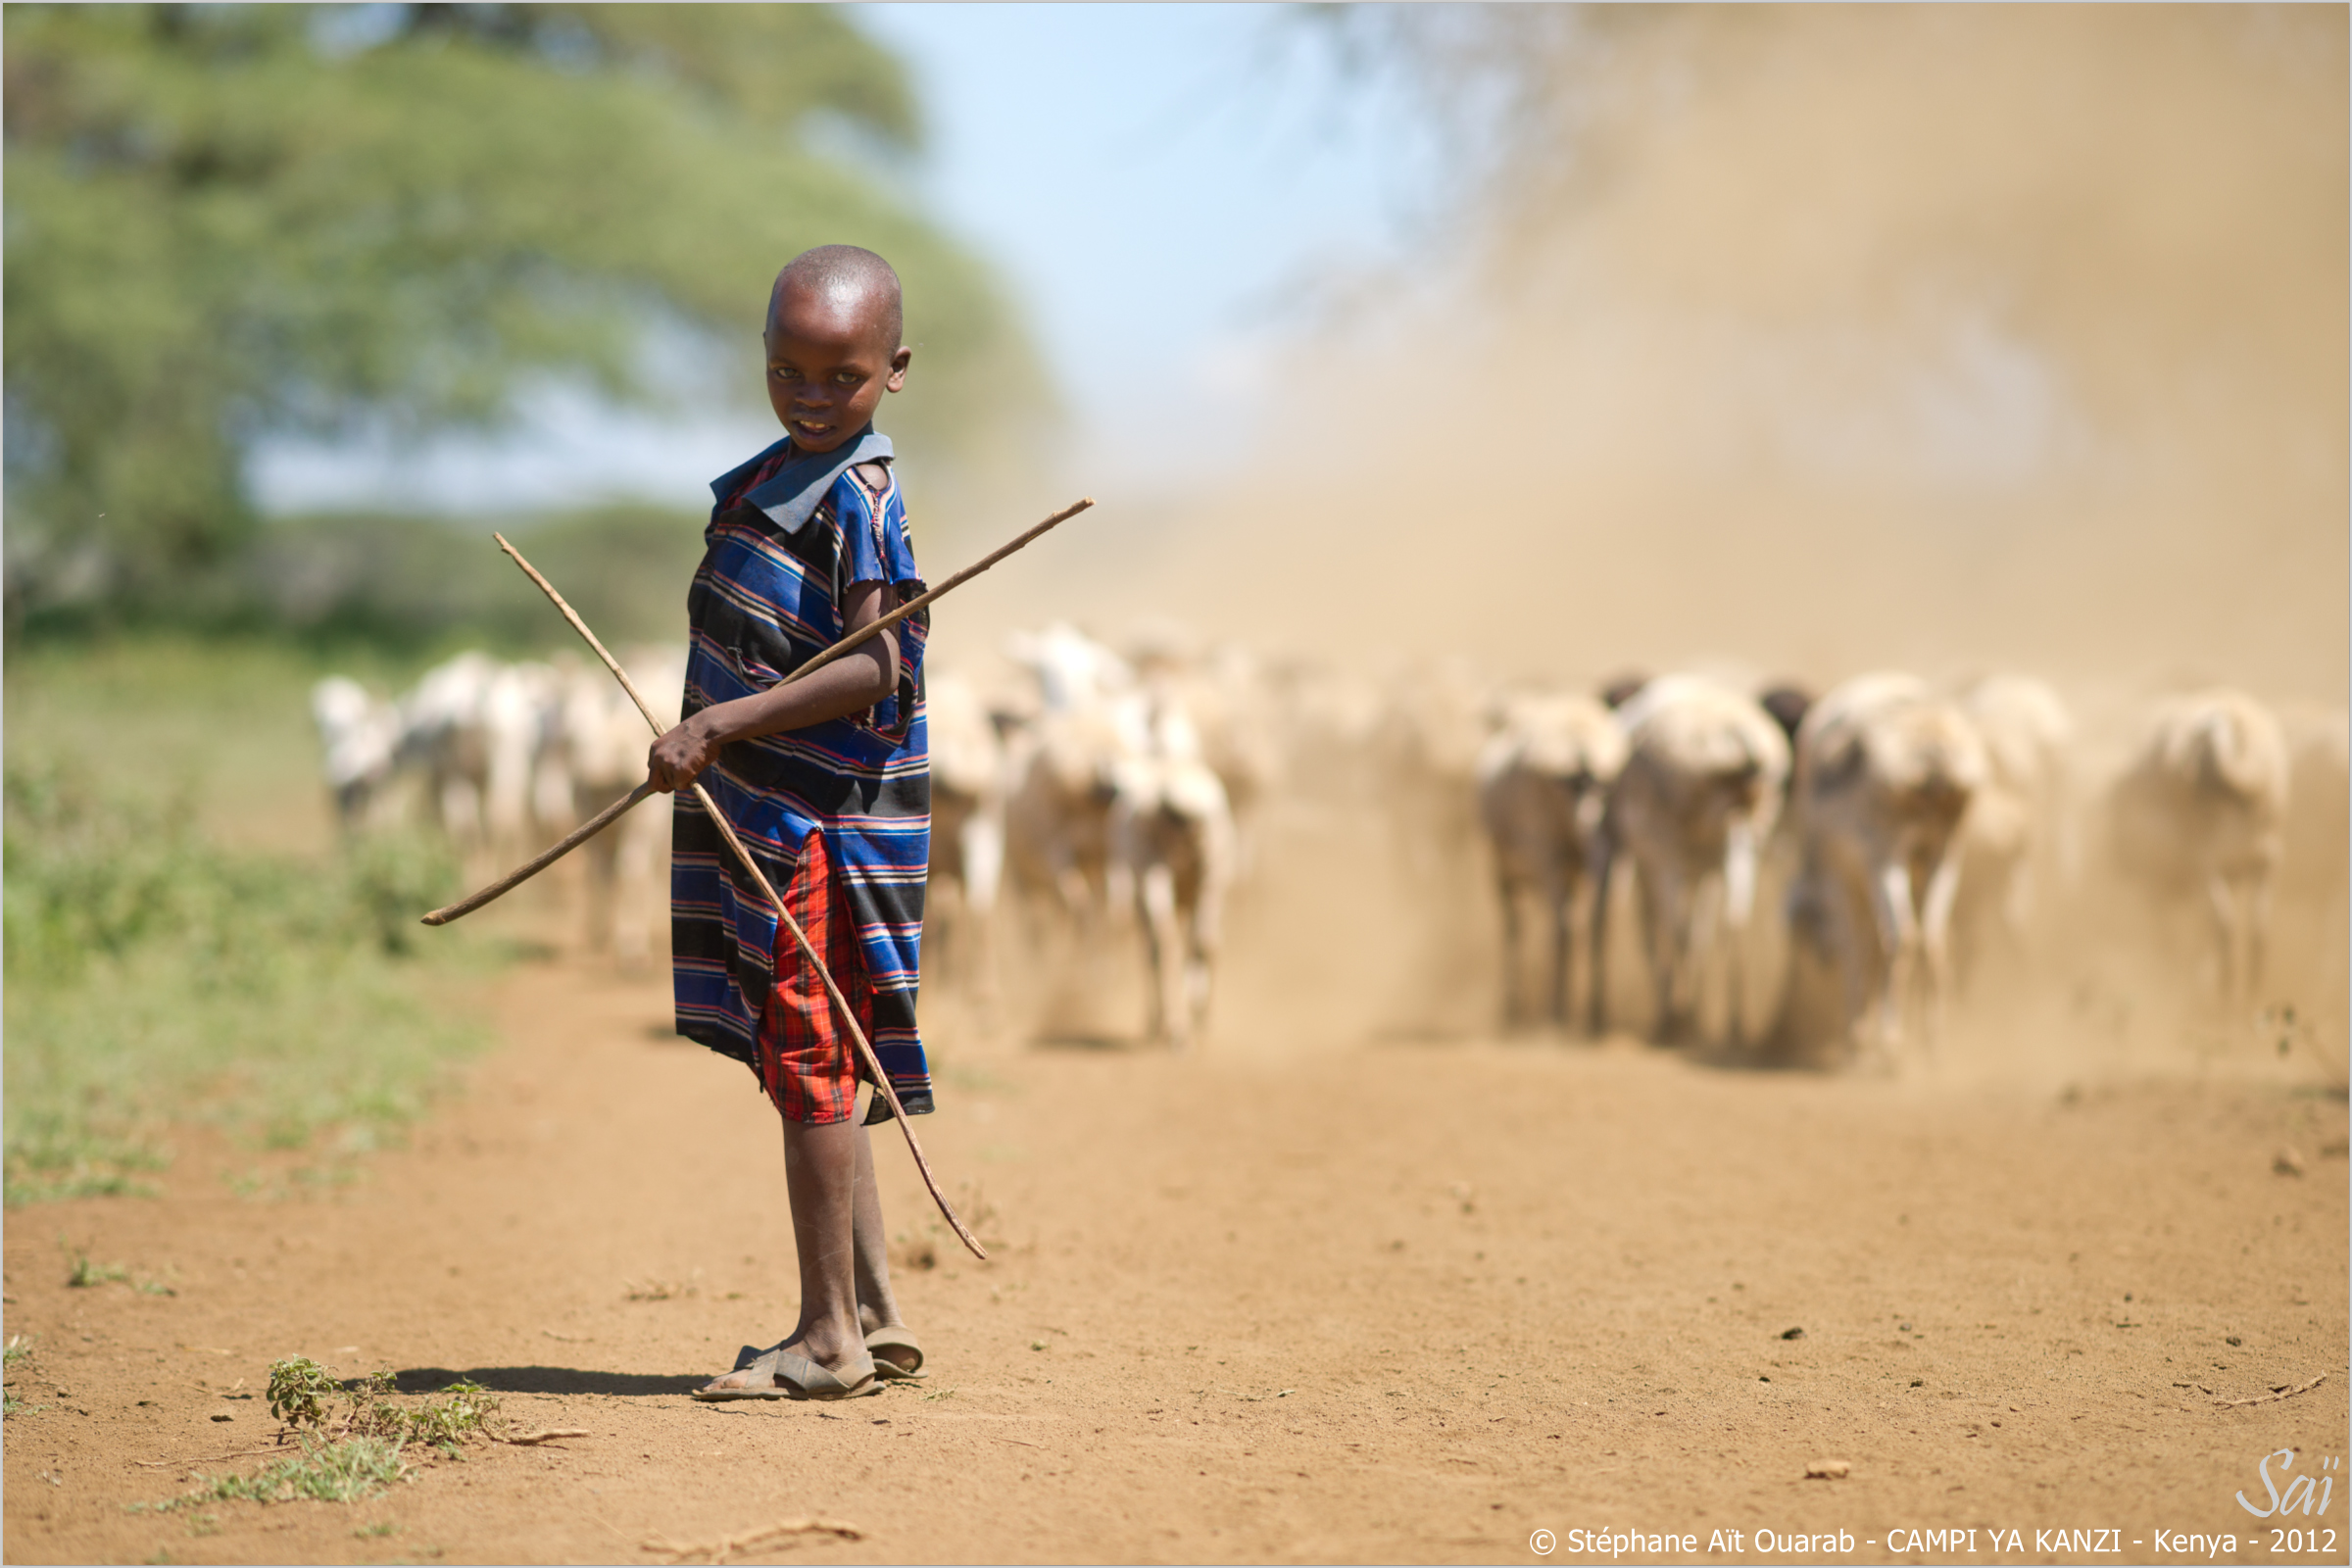  Maasaï village boy by Sai 